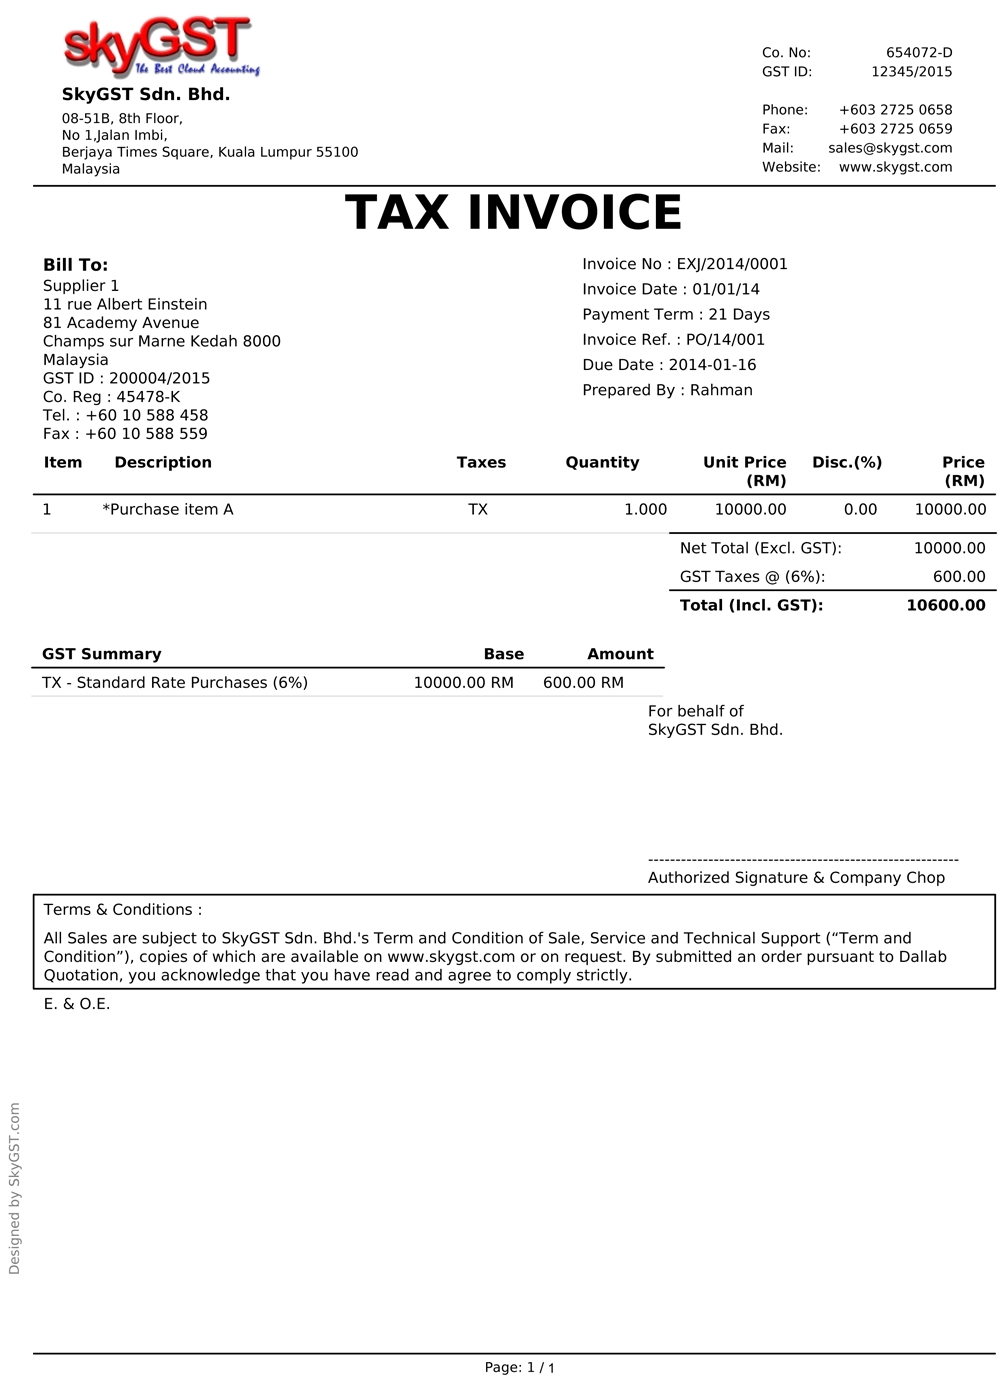 doc600808 tax invoice format 10 tax invoice templates tax invoice sample template